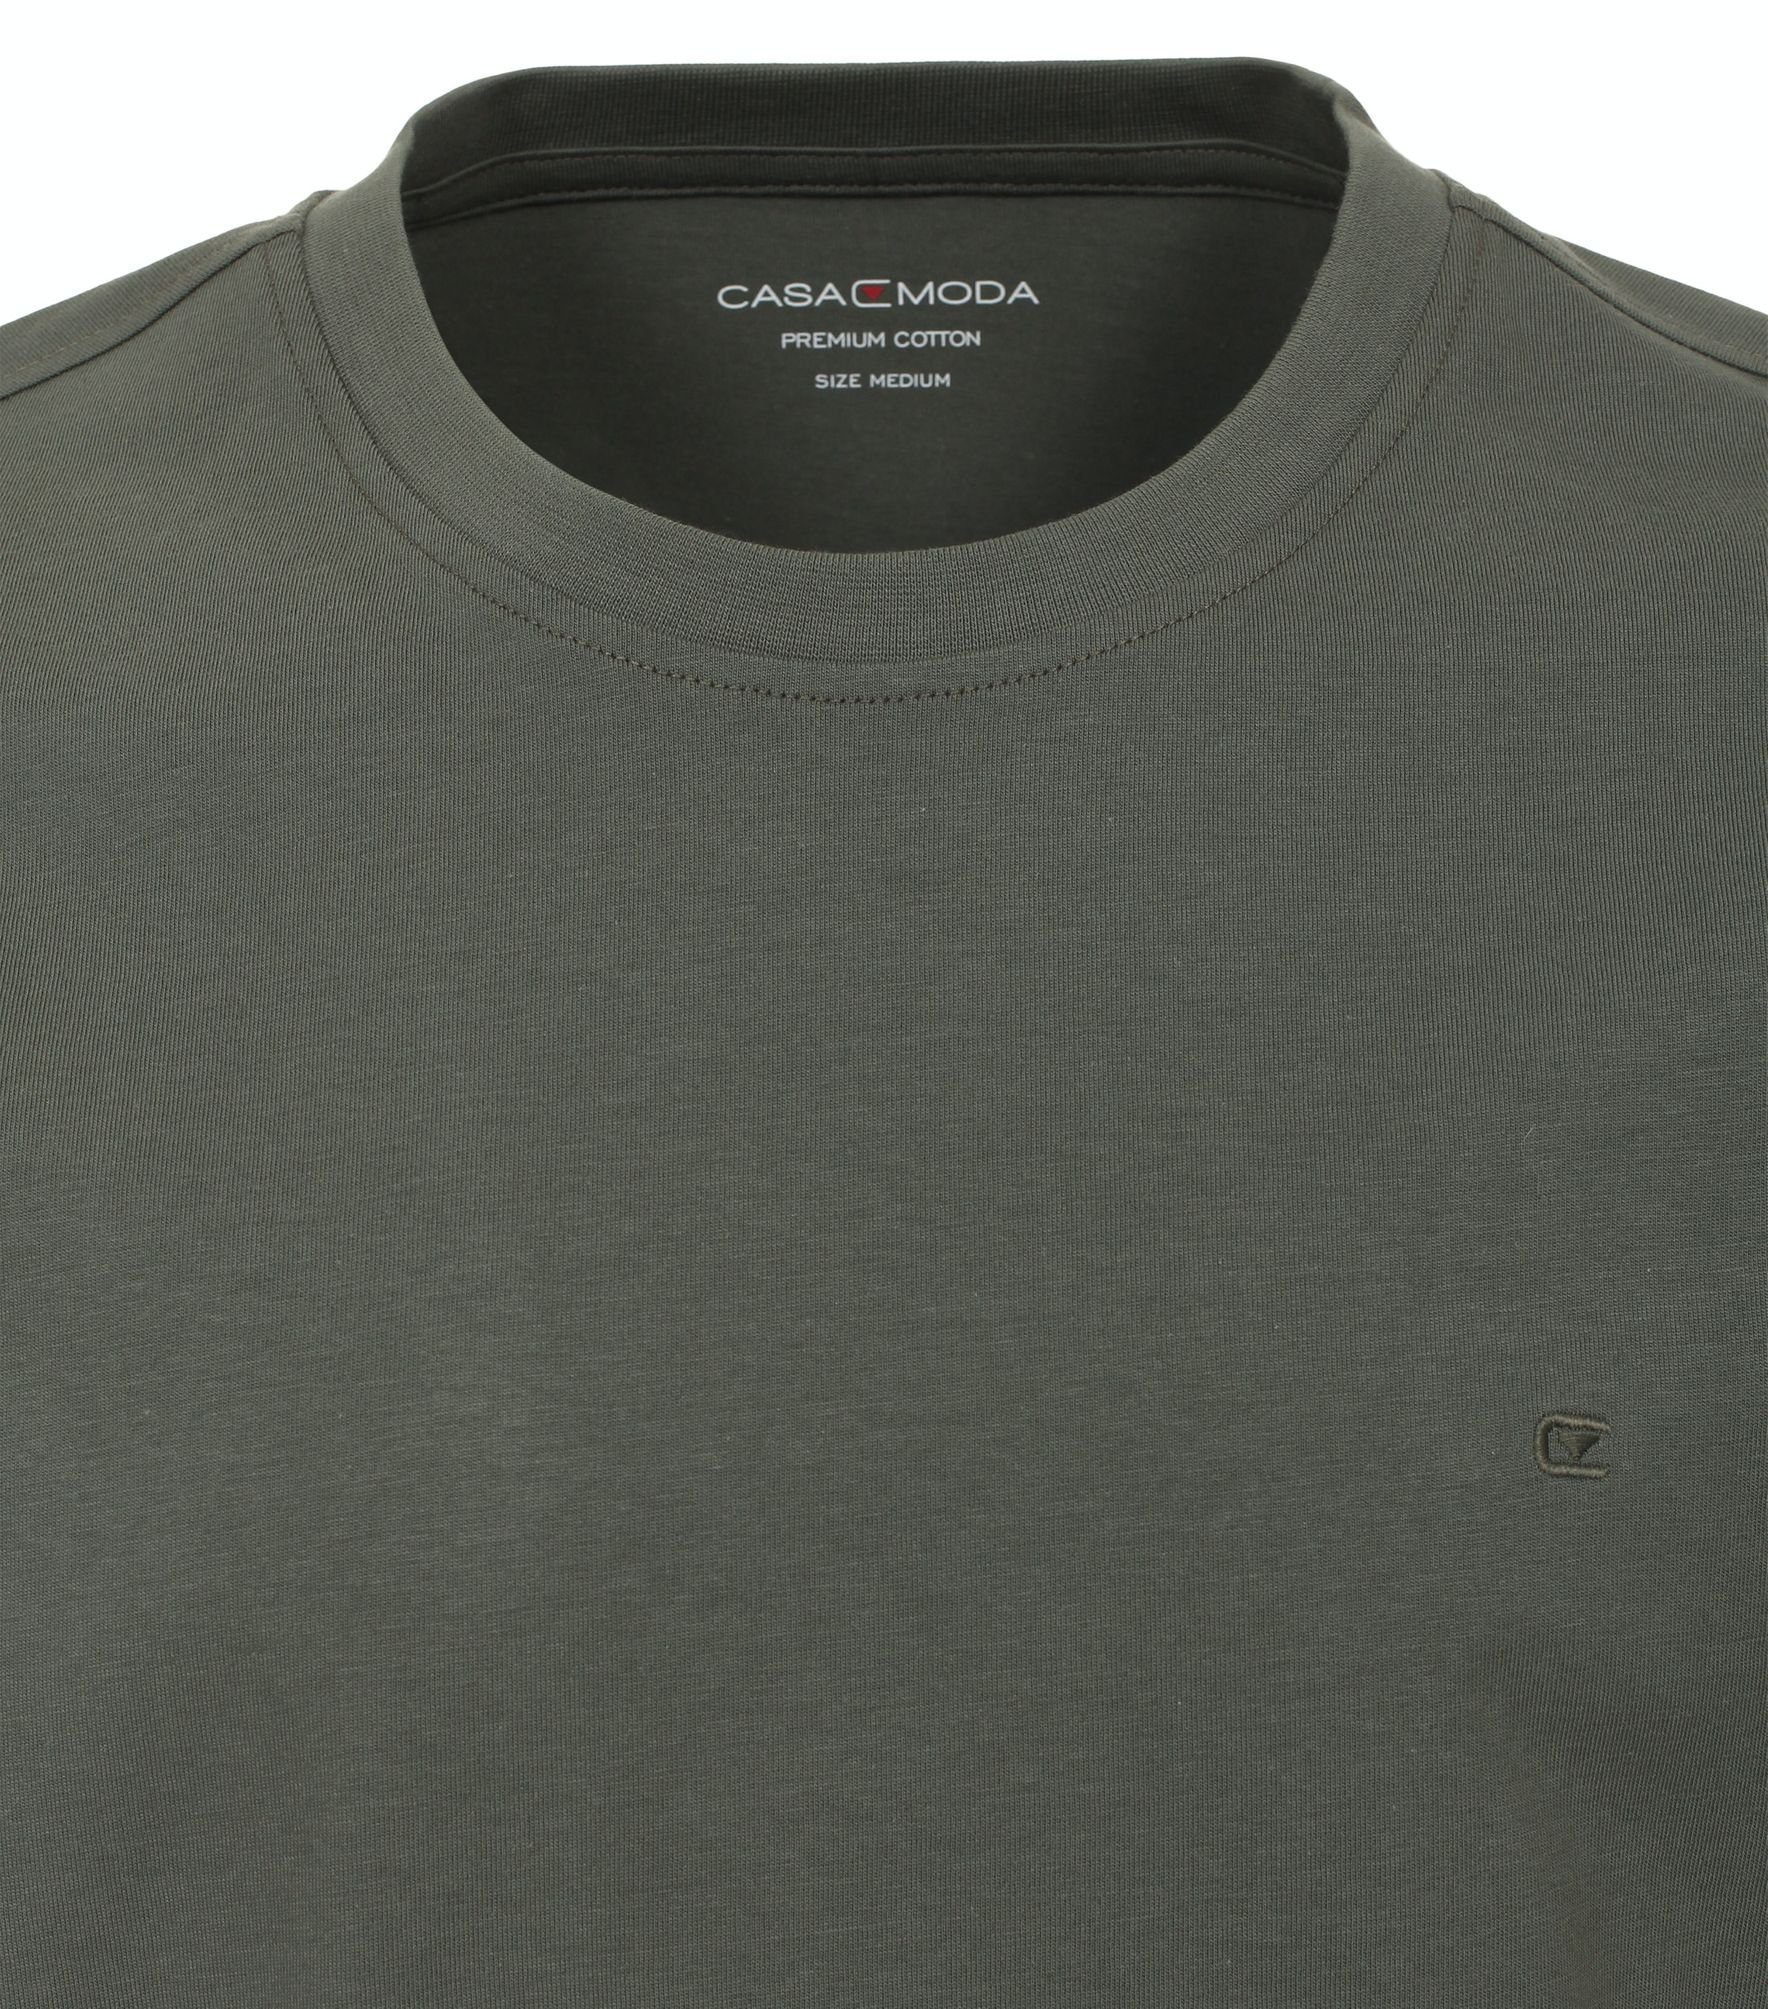 CASAMODA T-Shirt T-Shirt unifarben Grün (301) 004200